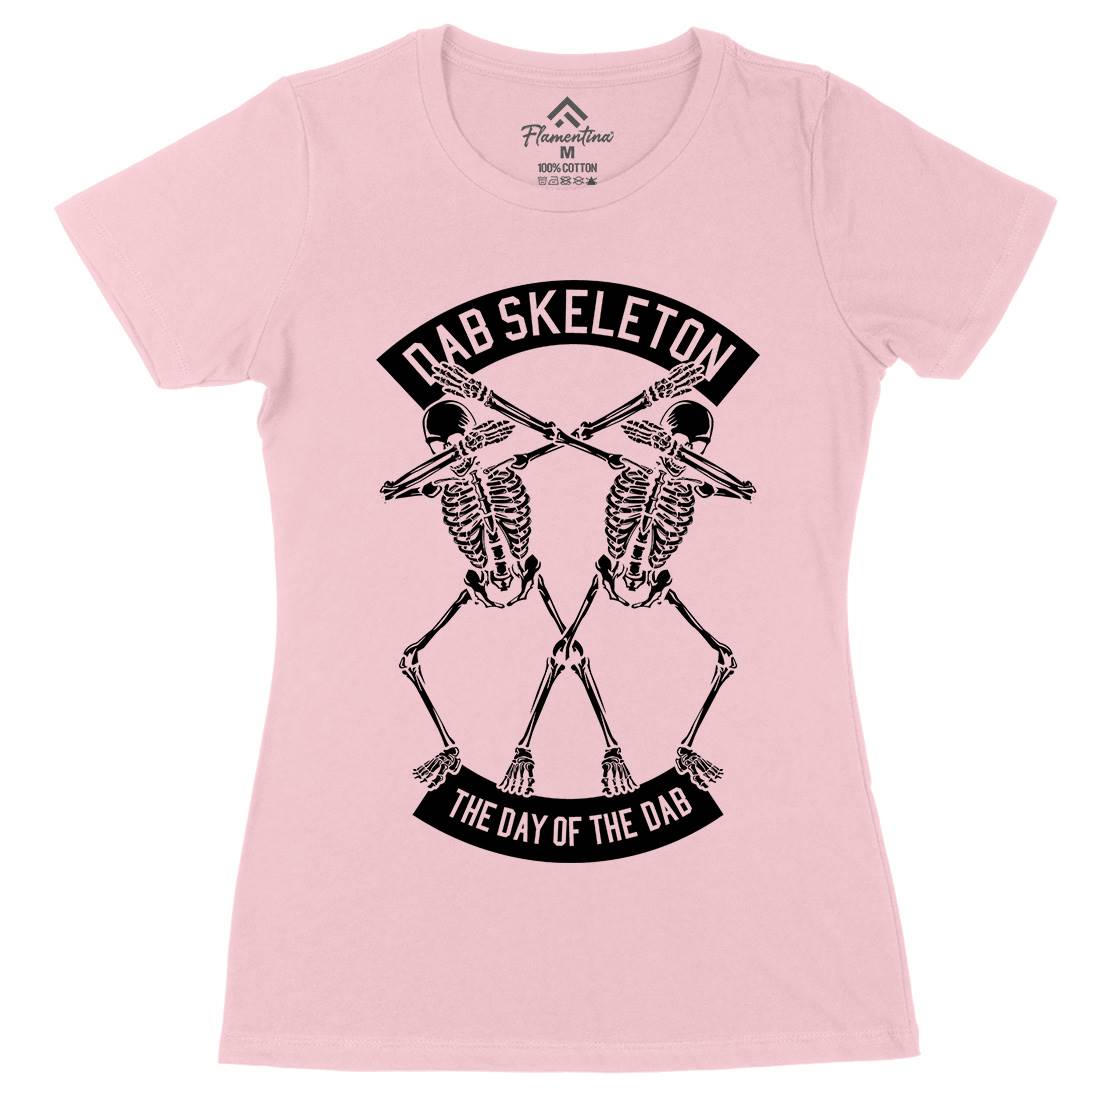 Dab Skeleton Womens Organic Crew Neck T-Shirt Music B524